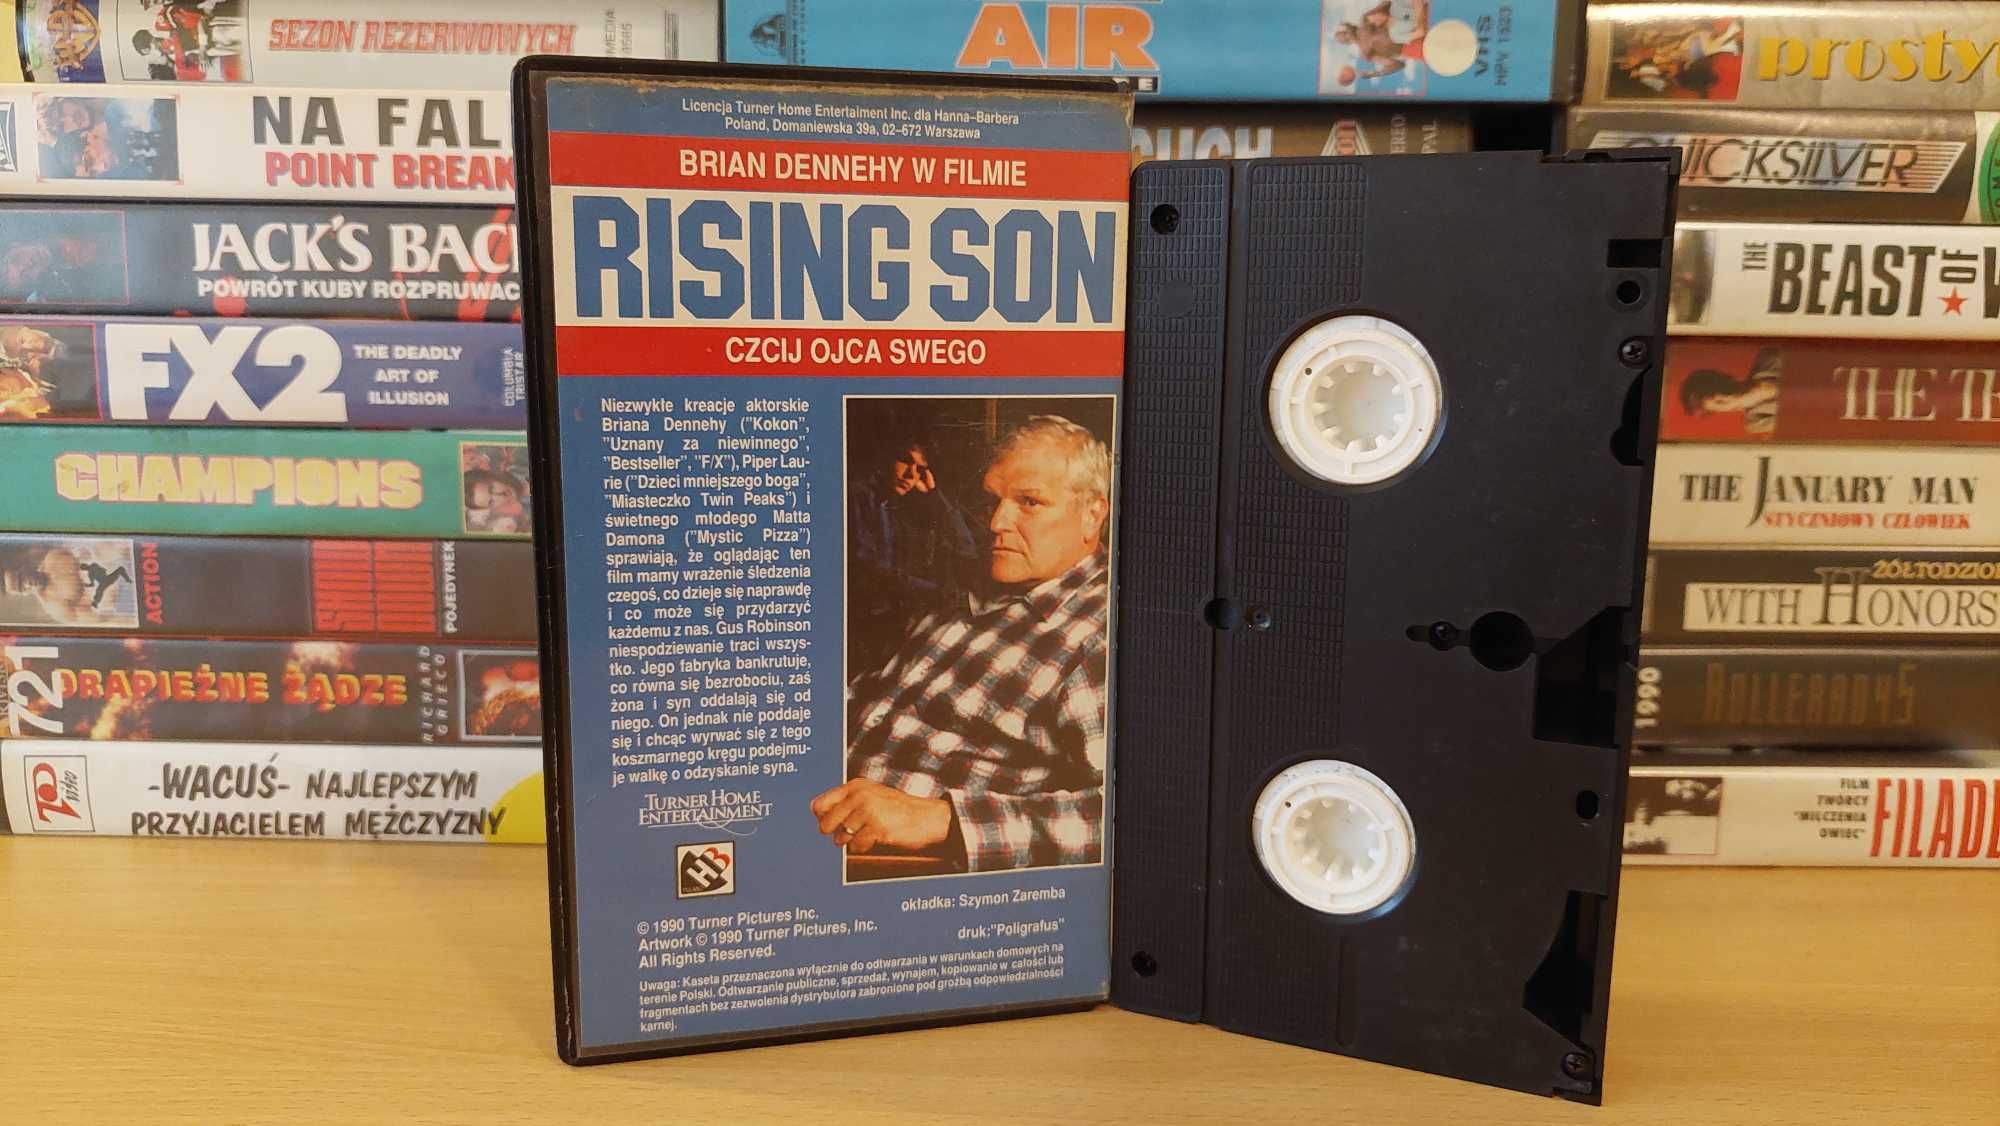 Czcij Ojca Swego - (Rising Son) - VHS